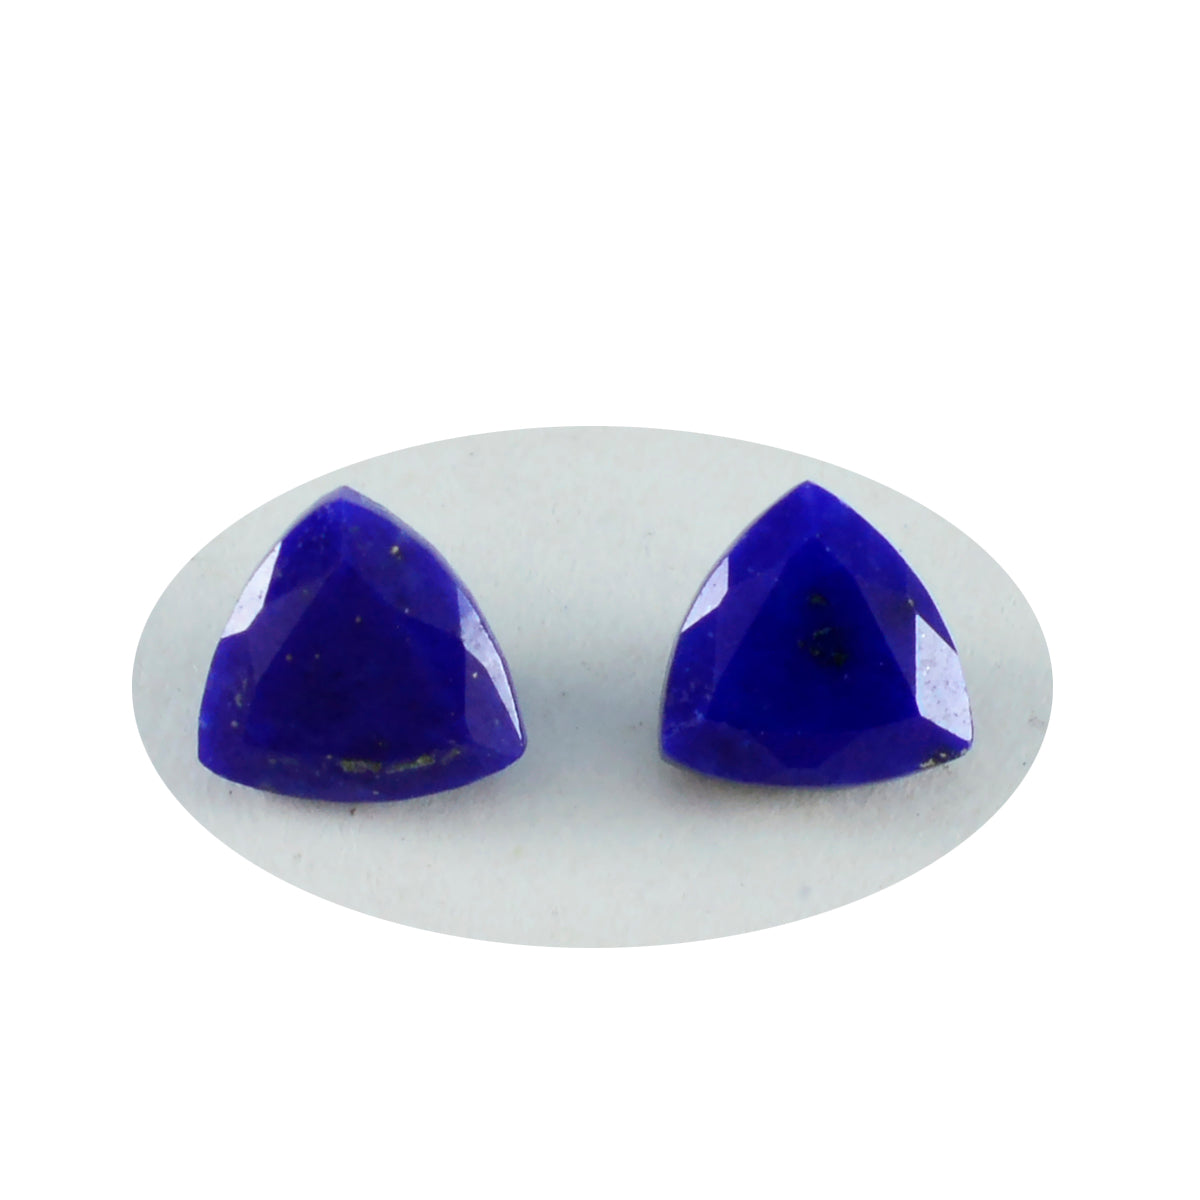 Riyogems 1PC Genuine Blue Lapis Lazuli Faceted 10x10 mm Trillion Shape A Quality Gem